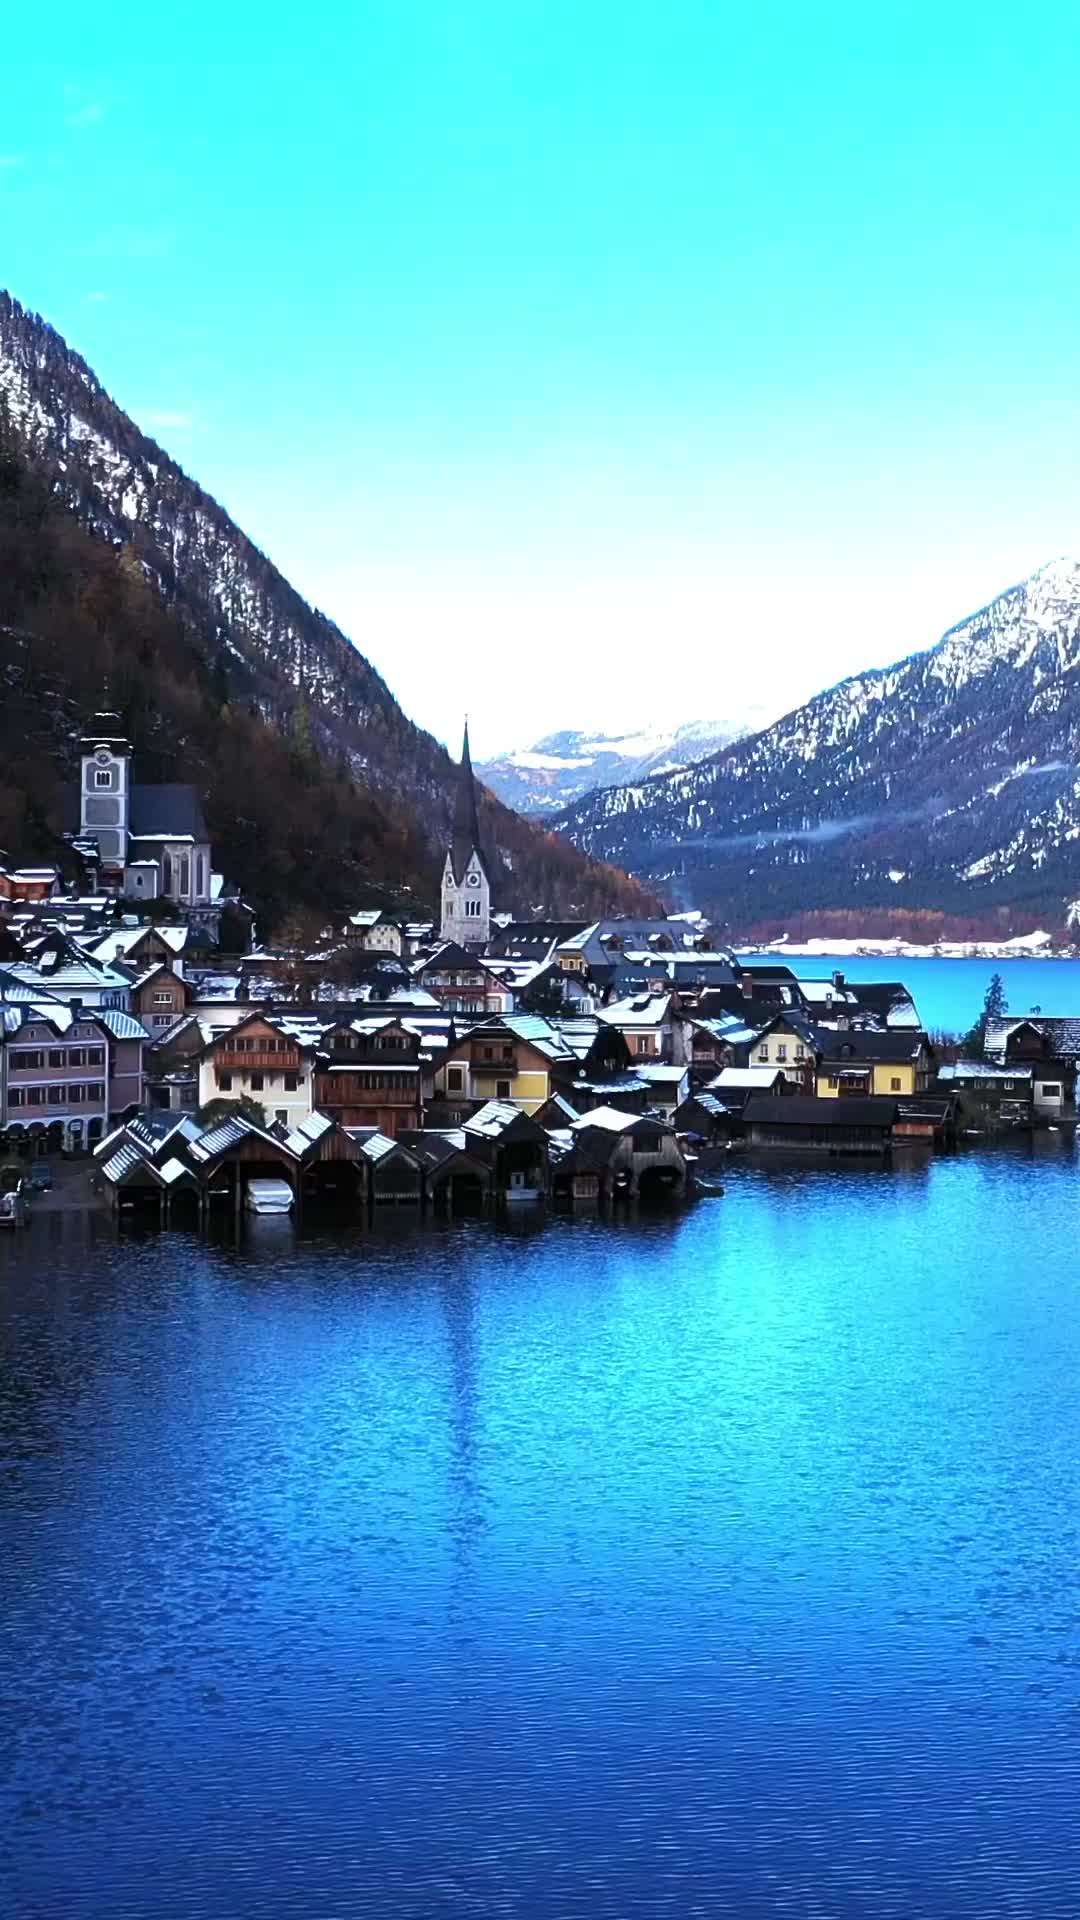 Discover Hallstatt: Austria's Scenic Village by the Lake